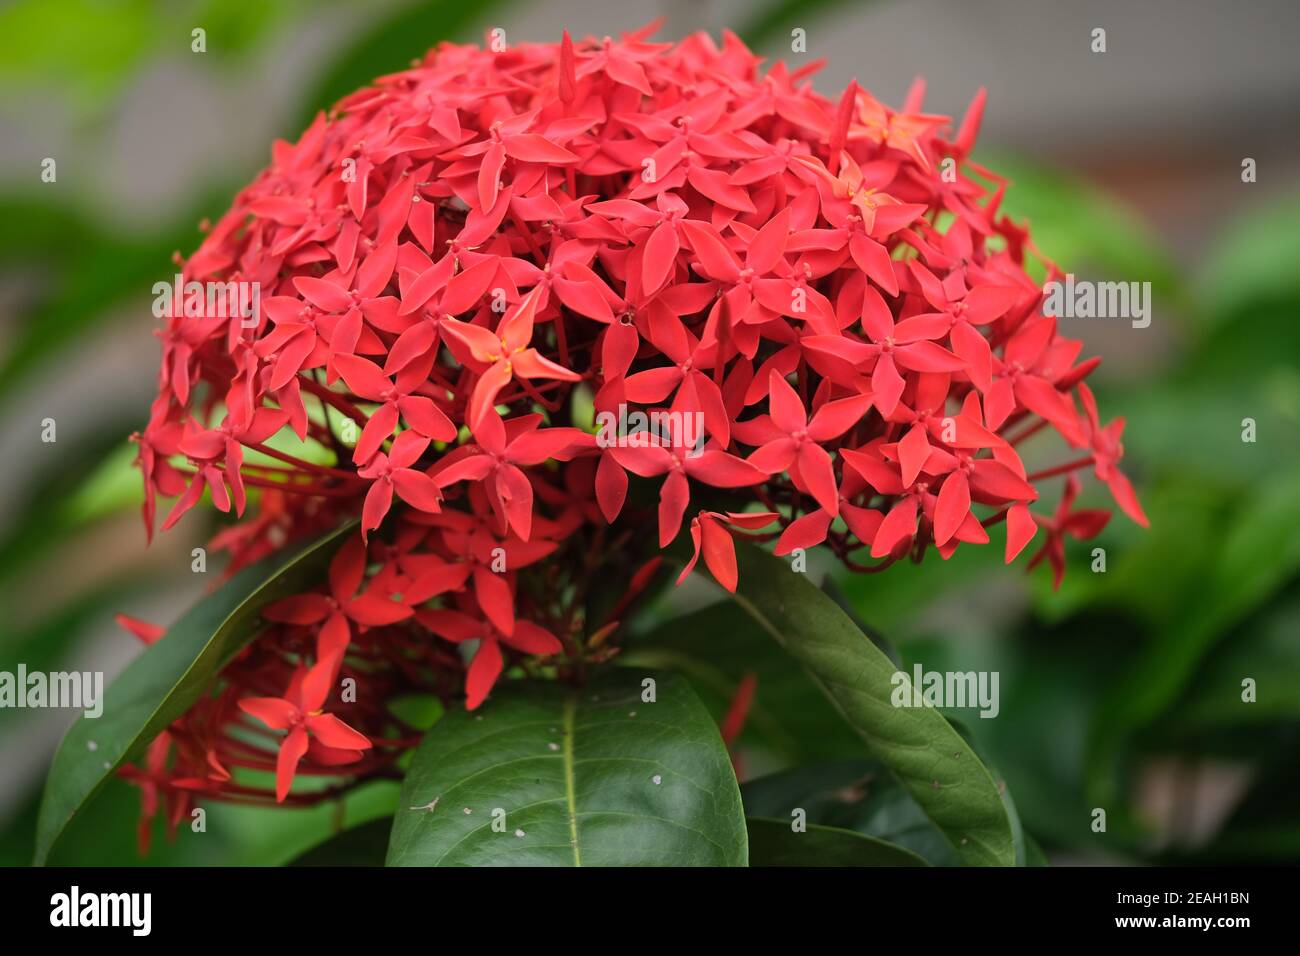 Indonesia Bali   Ubud Red Ixora flowering plant   West Indian ...